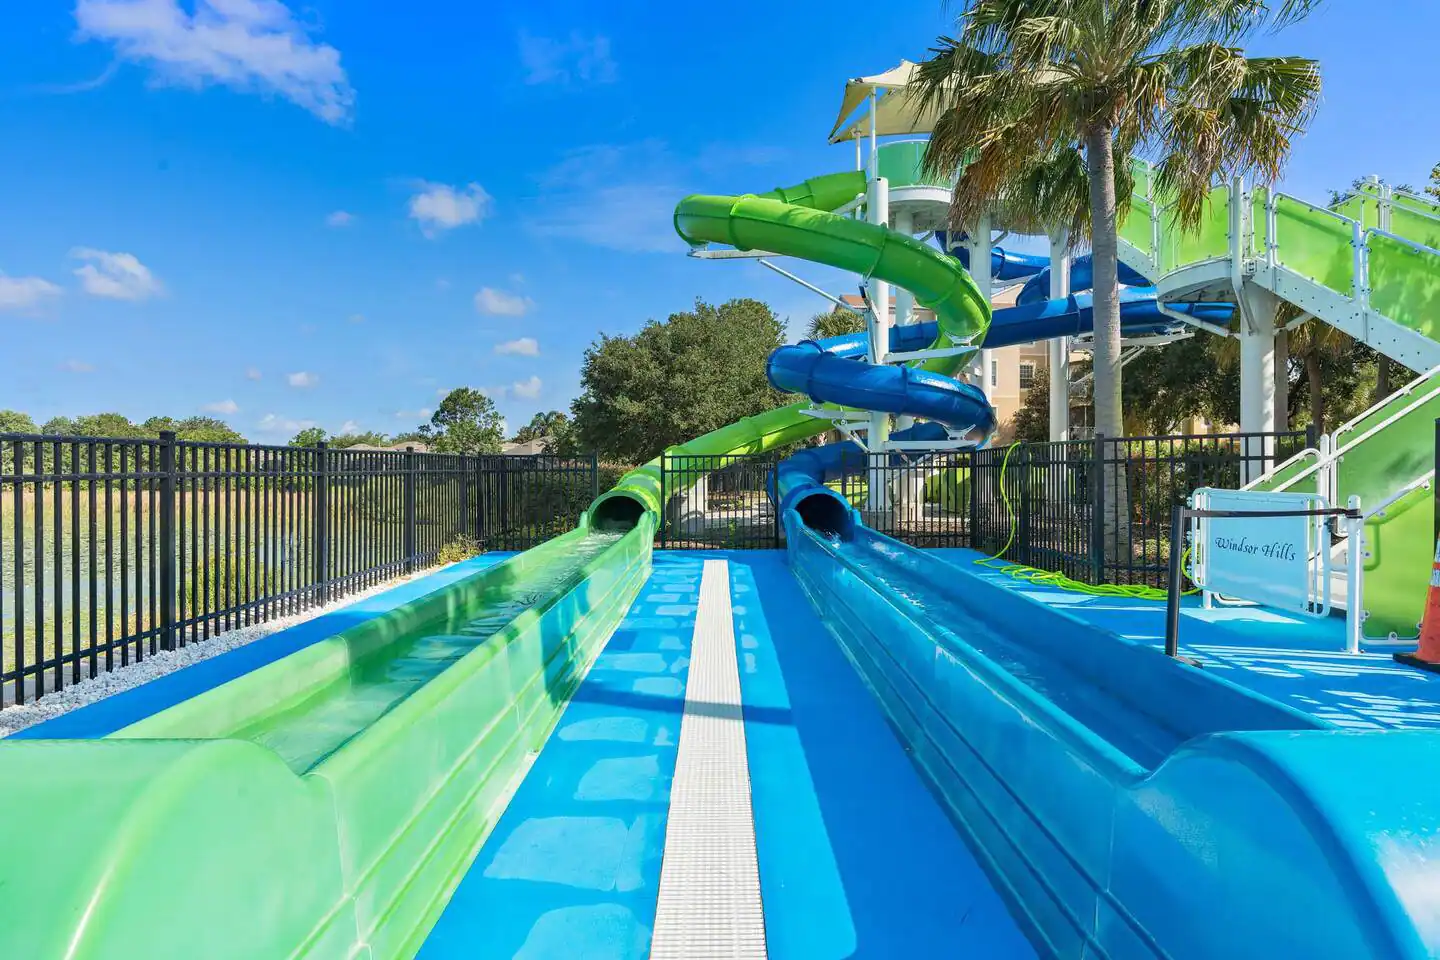 Slides at the Community Pool